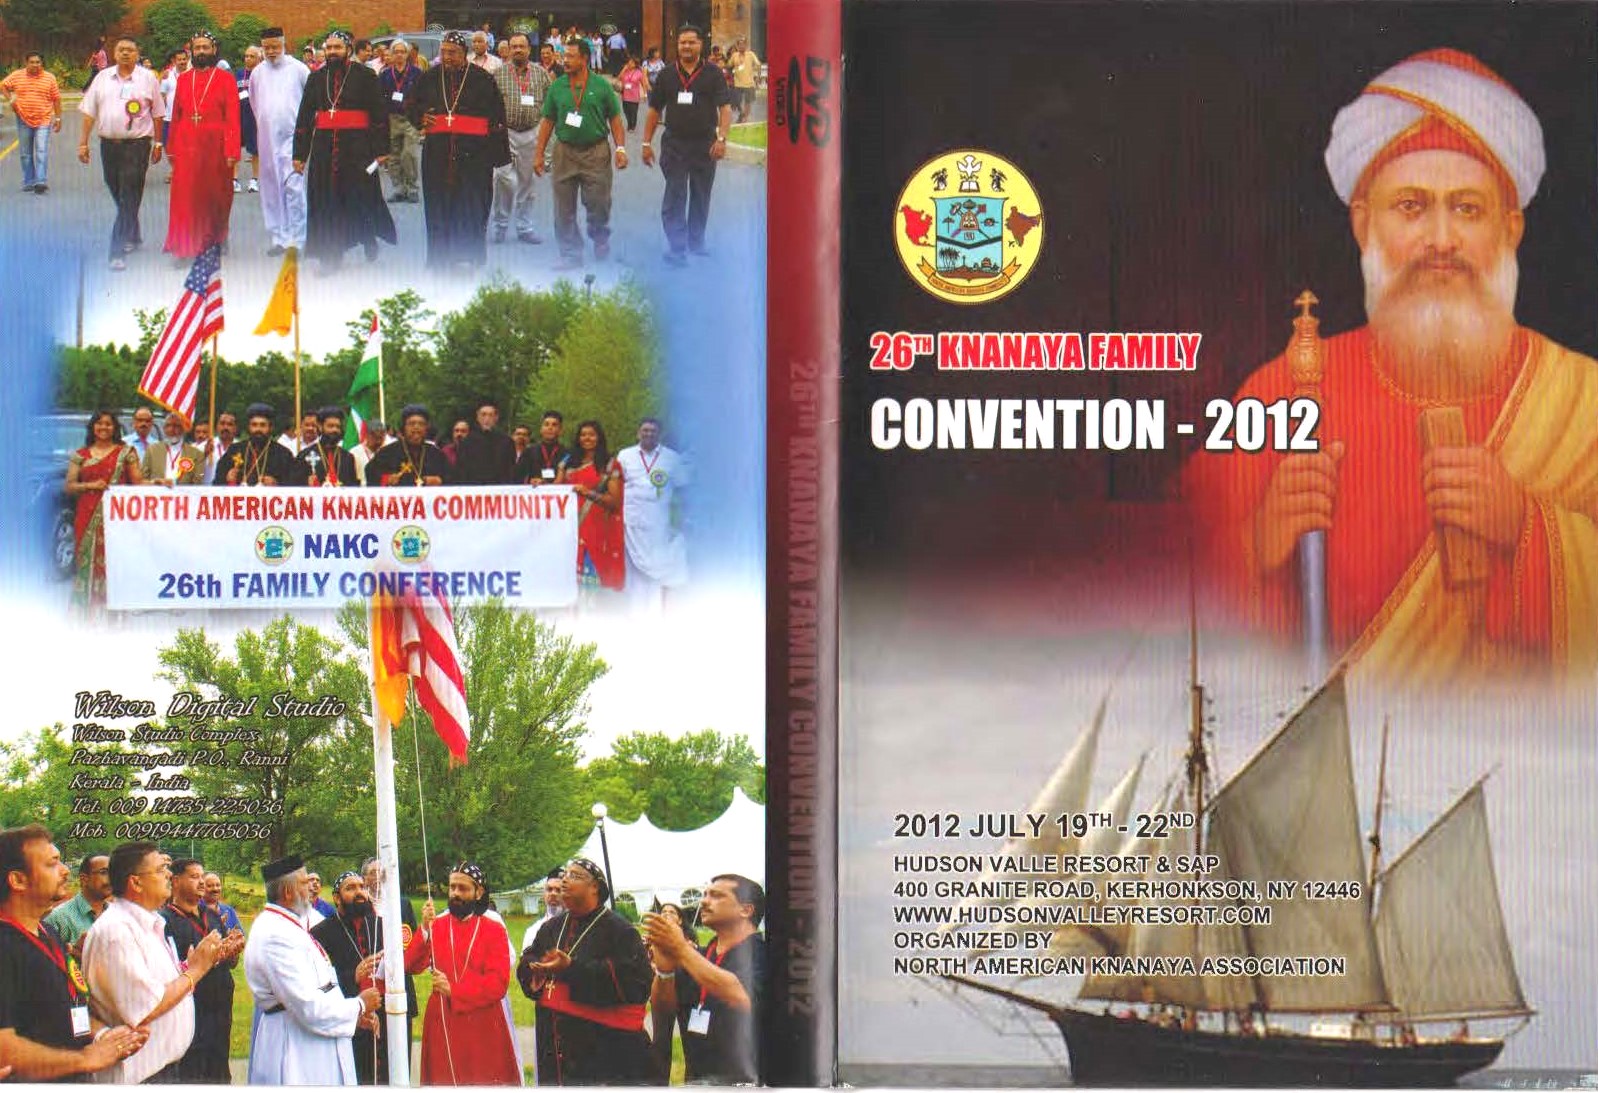 Video of Knanaya Family Convention 2012